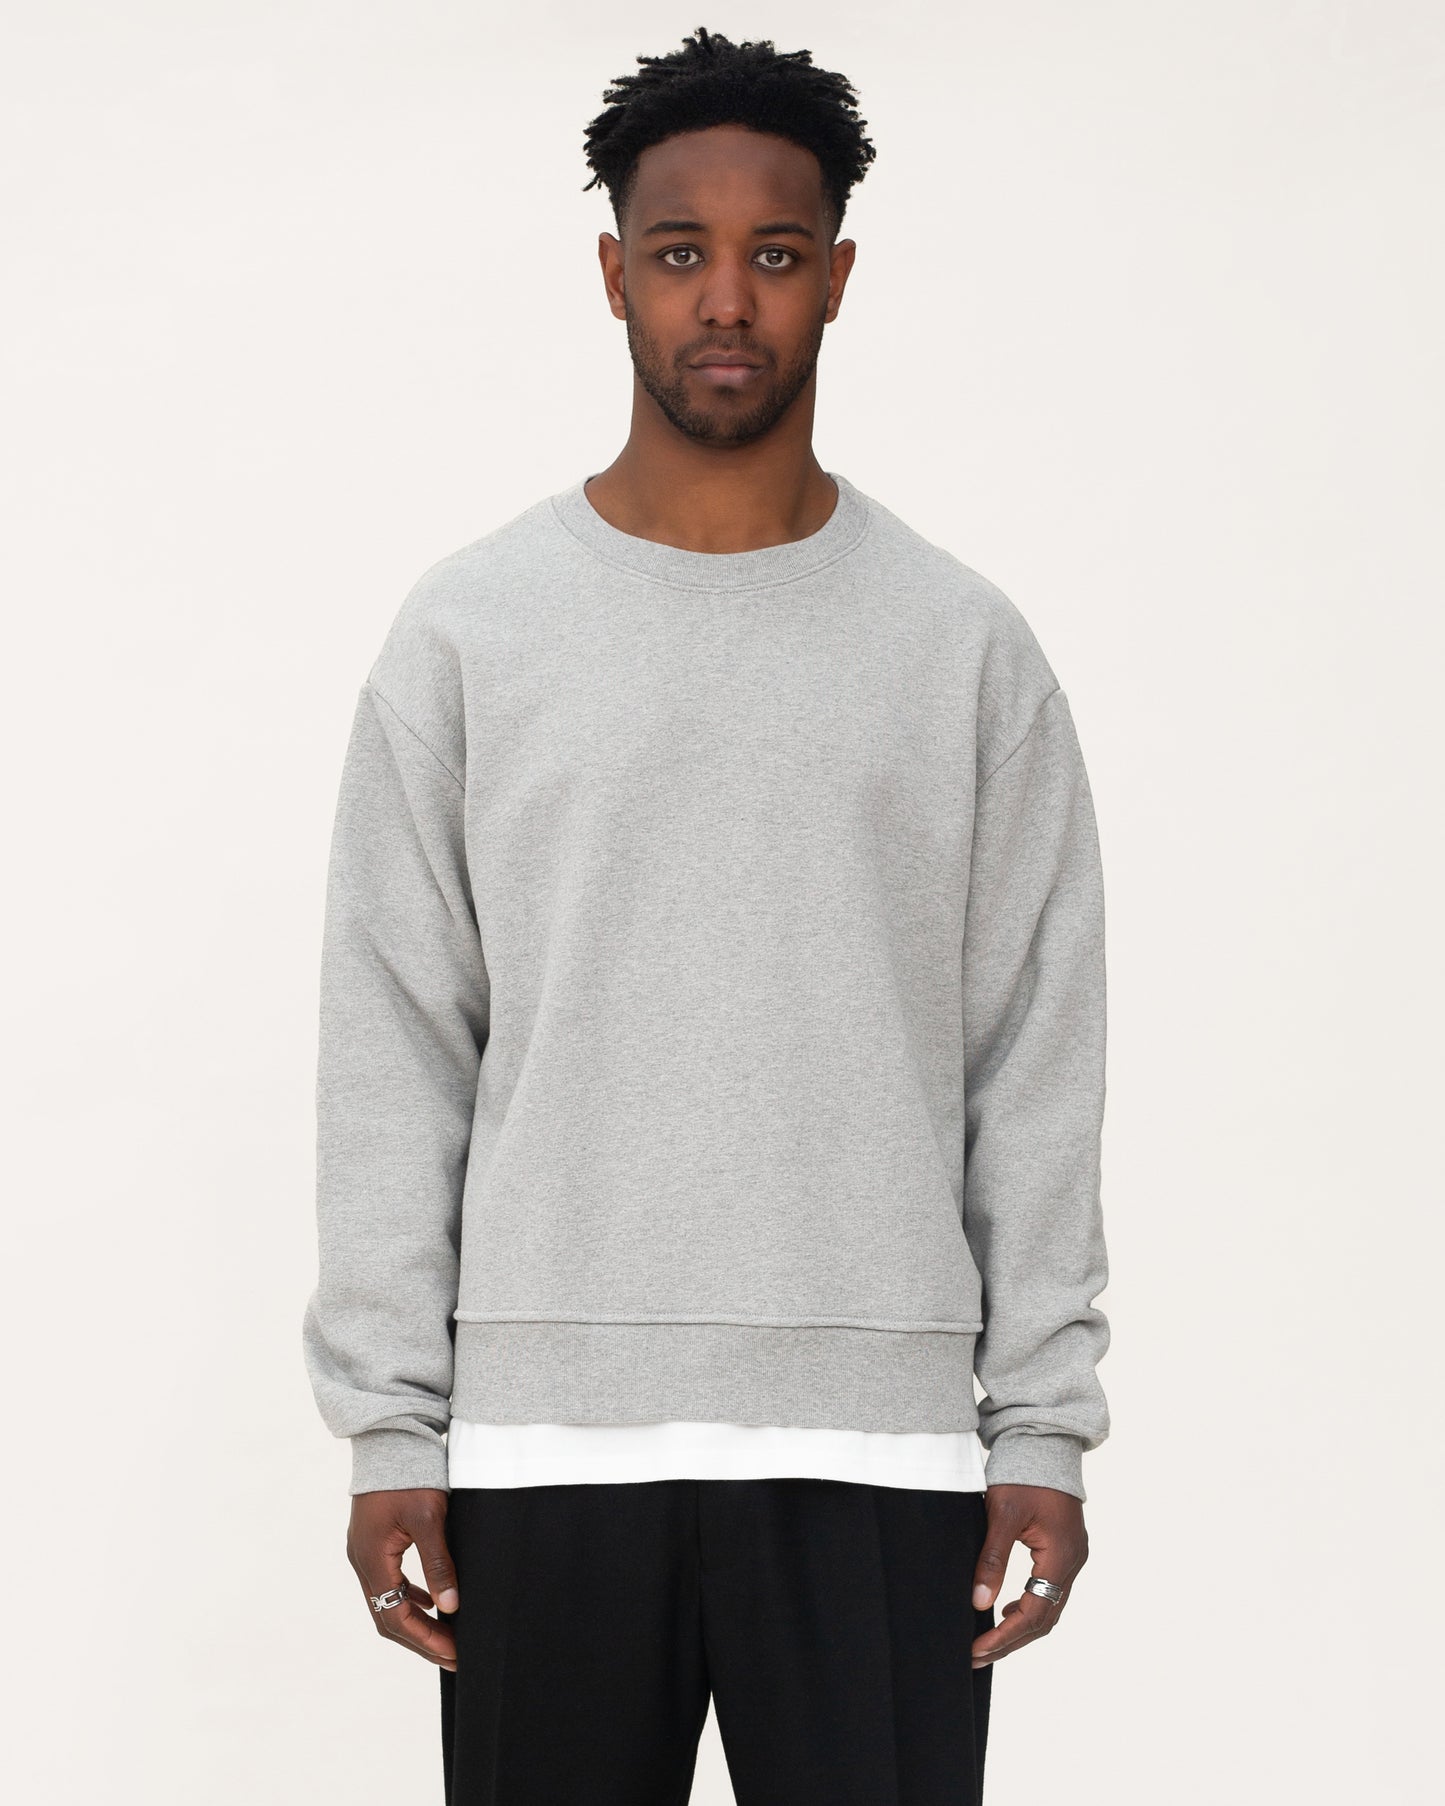 mens designer sweatshirts, mens grey sweatshirt, front side